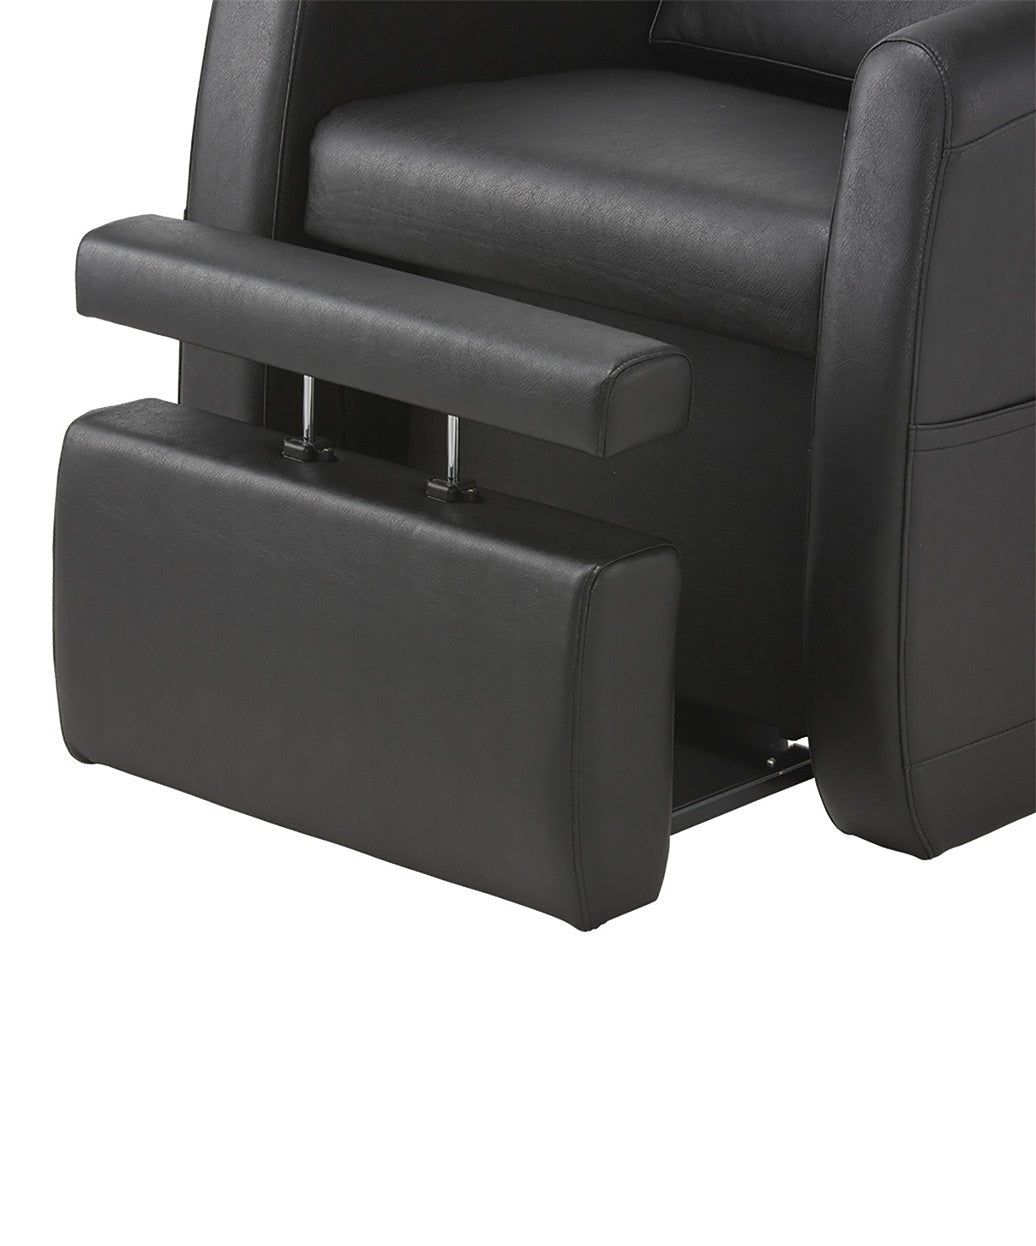 Pibbs Lounge Pedicure Chair w/Vibration Massage